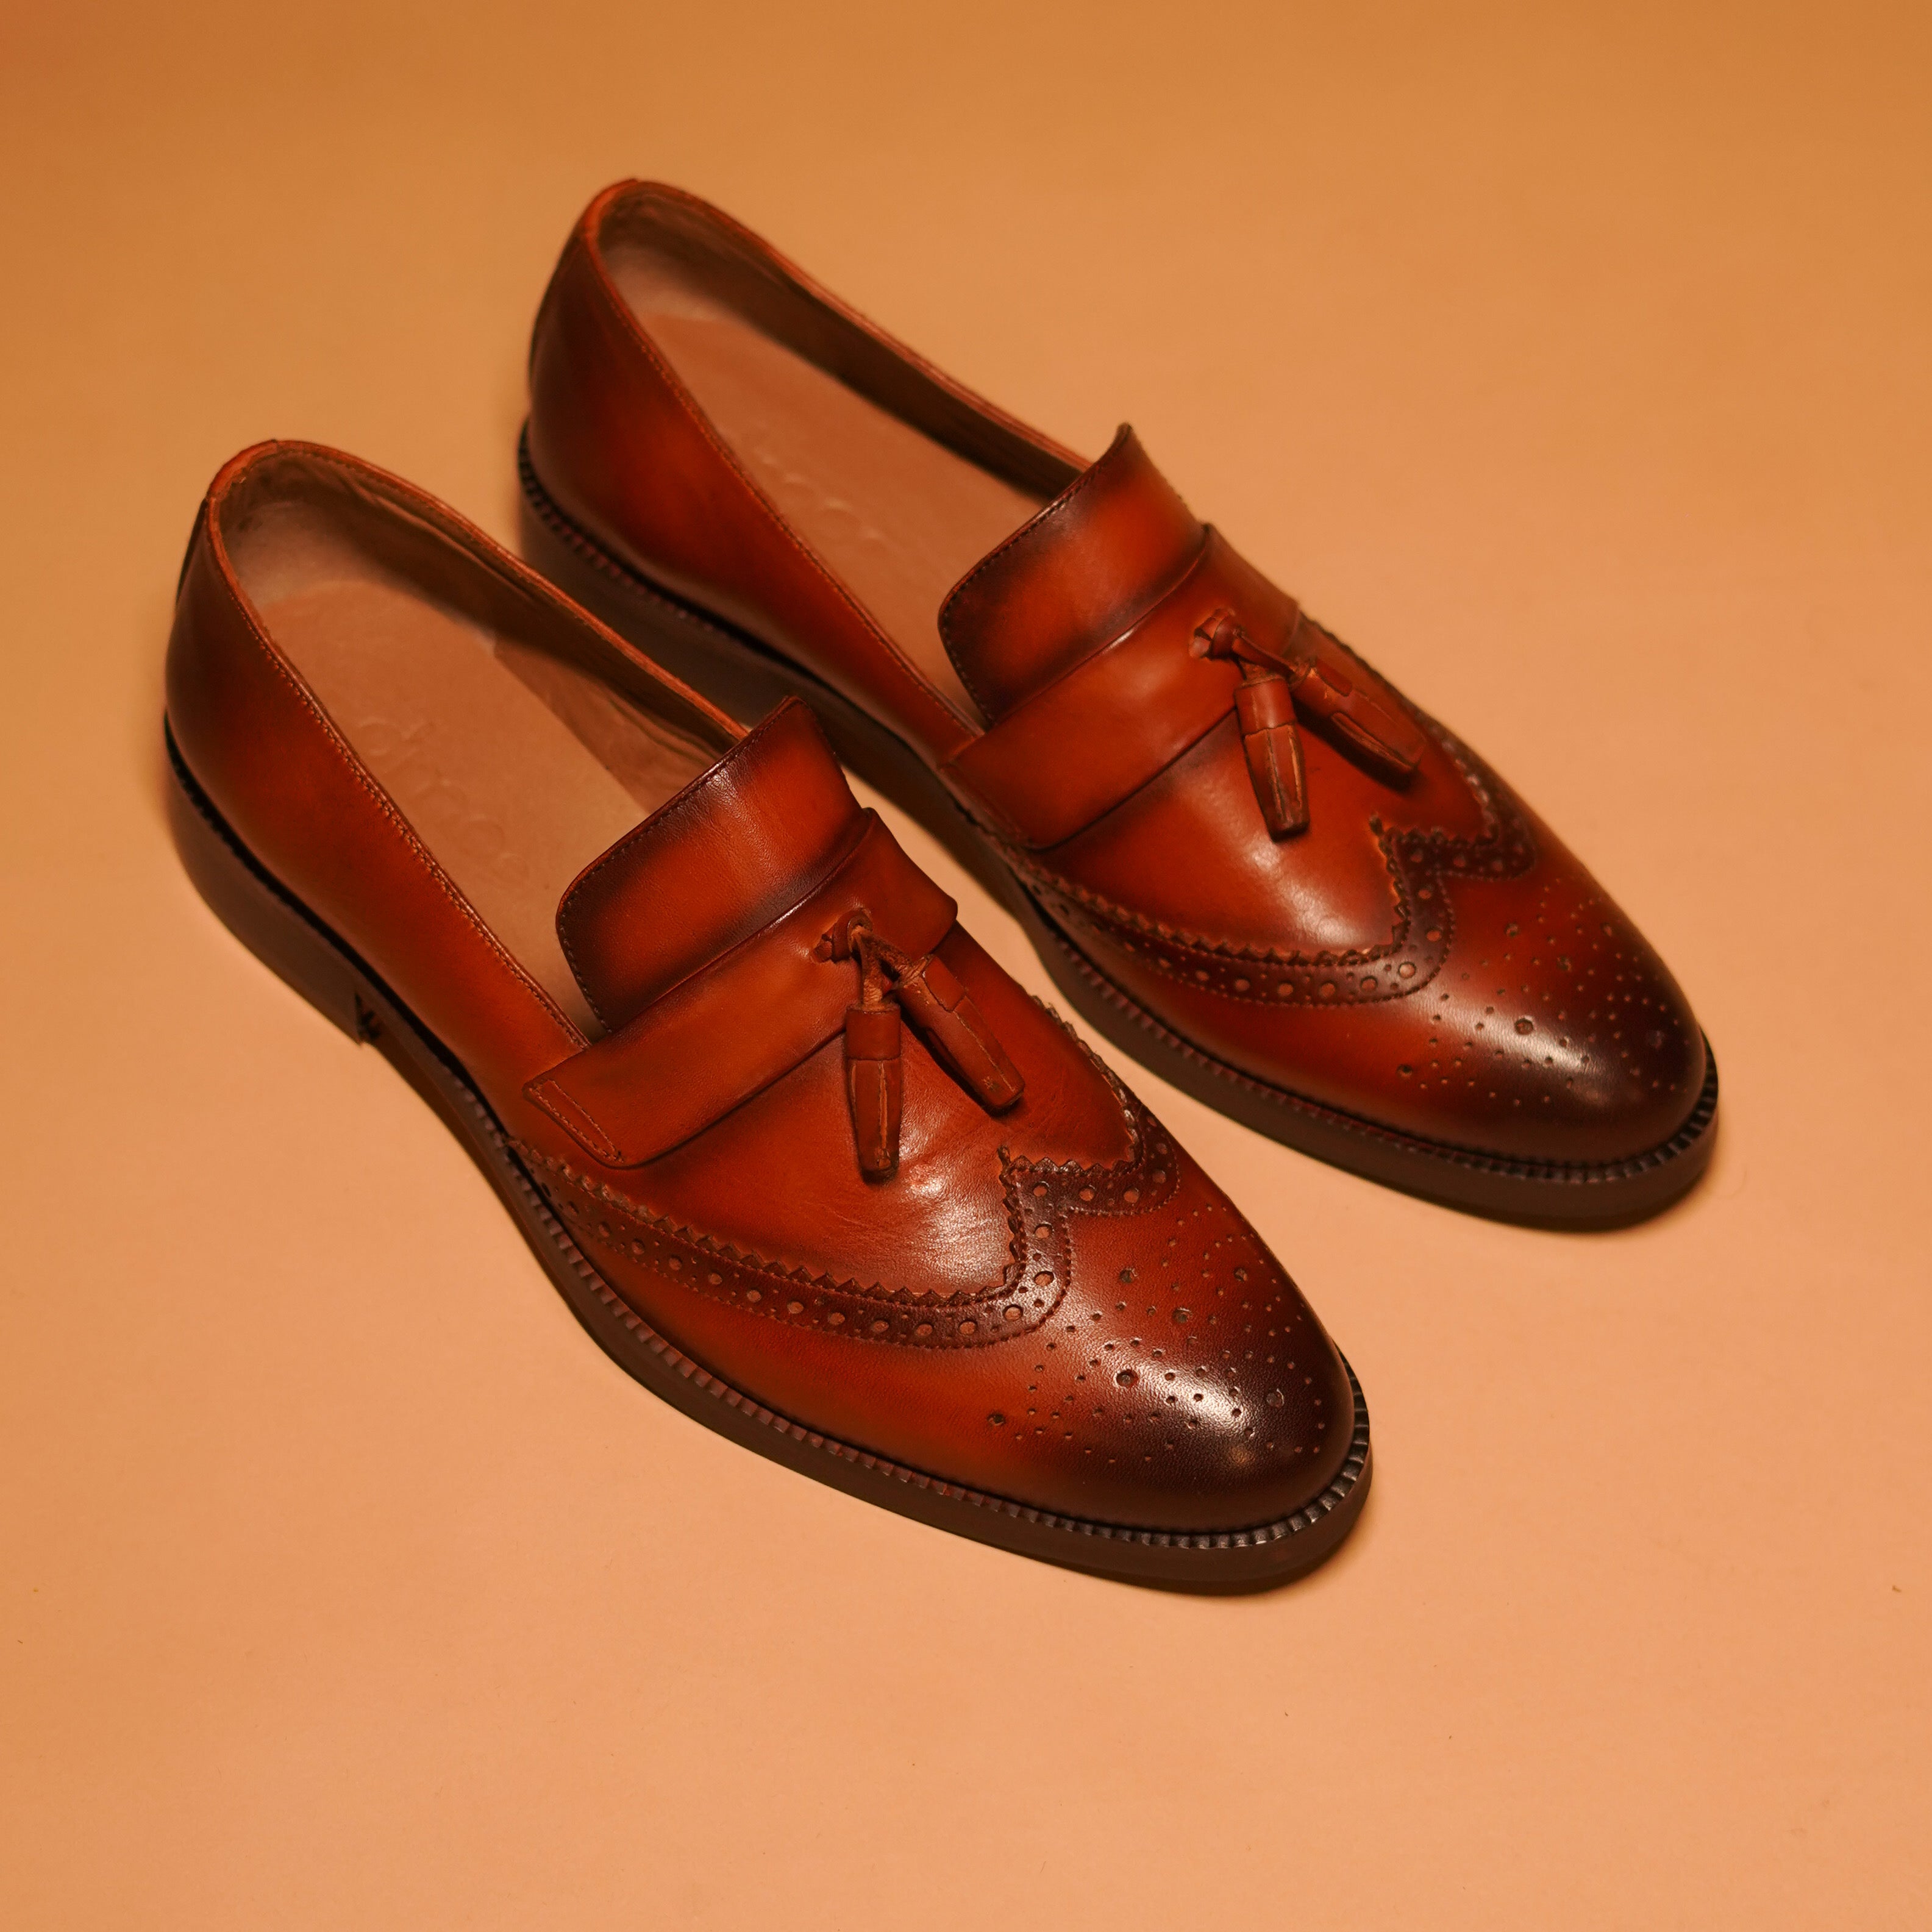 Handcrafted Motivo Broguo loafer in dark tan dual-shade full-grain leather with elegant tassel.